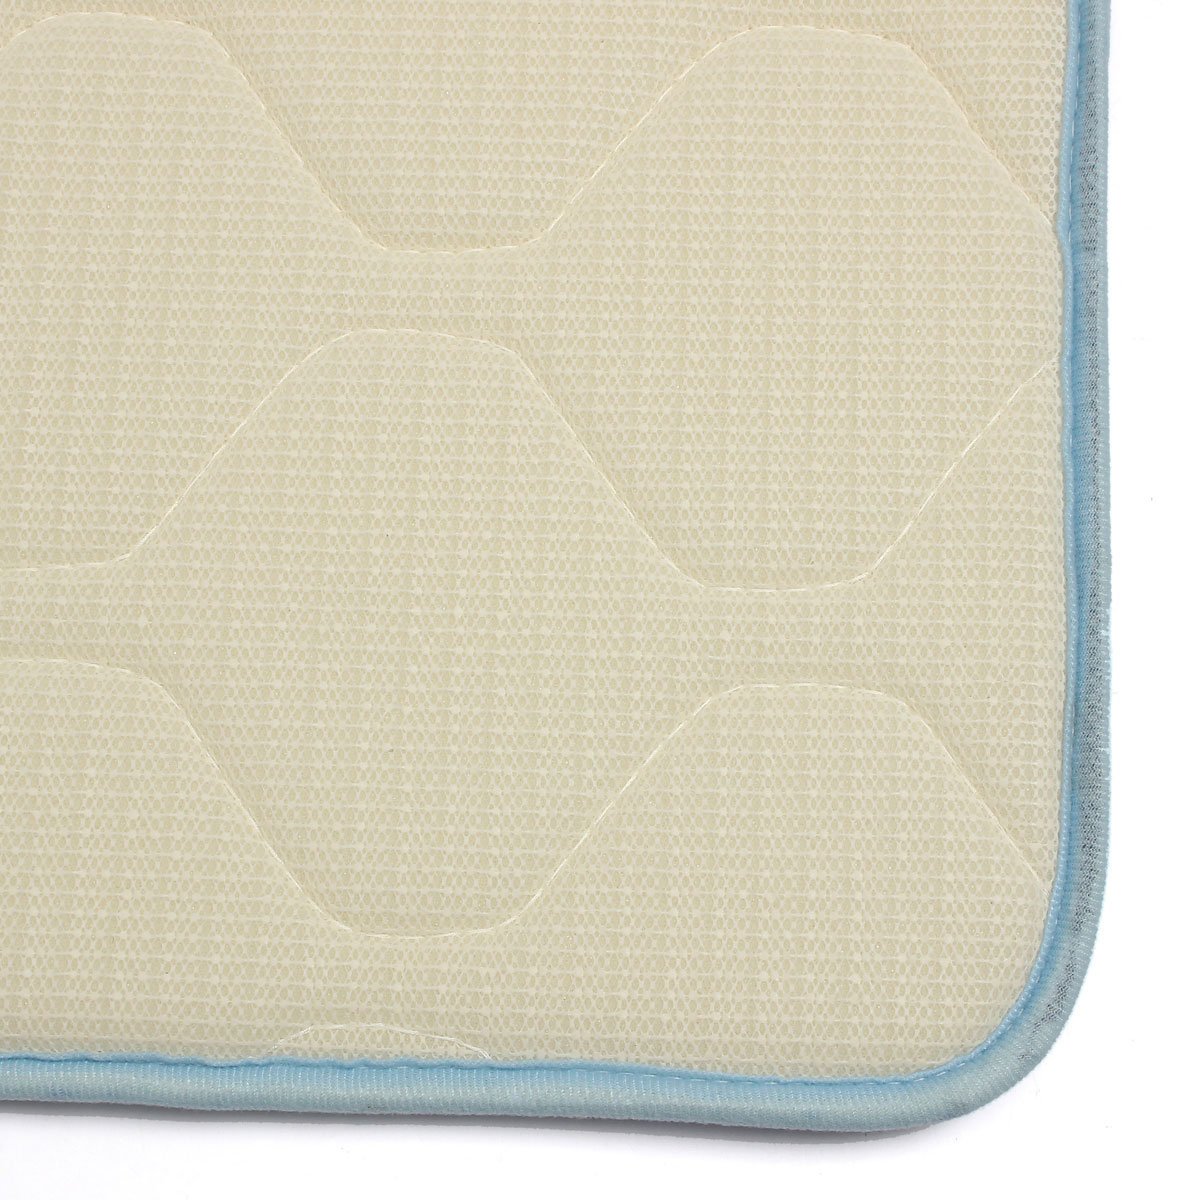 120x40cm Absorbent Anti Skid Memory Foam Mat Coral Velvet Bath Rug Chronic Rebound Floor Carpet